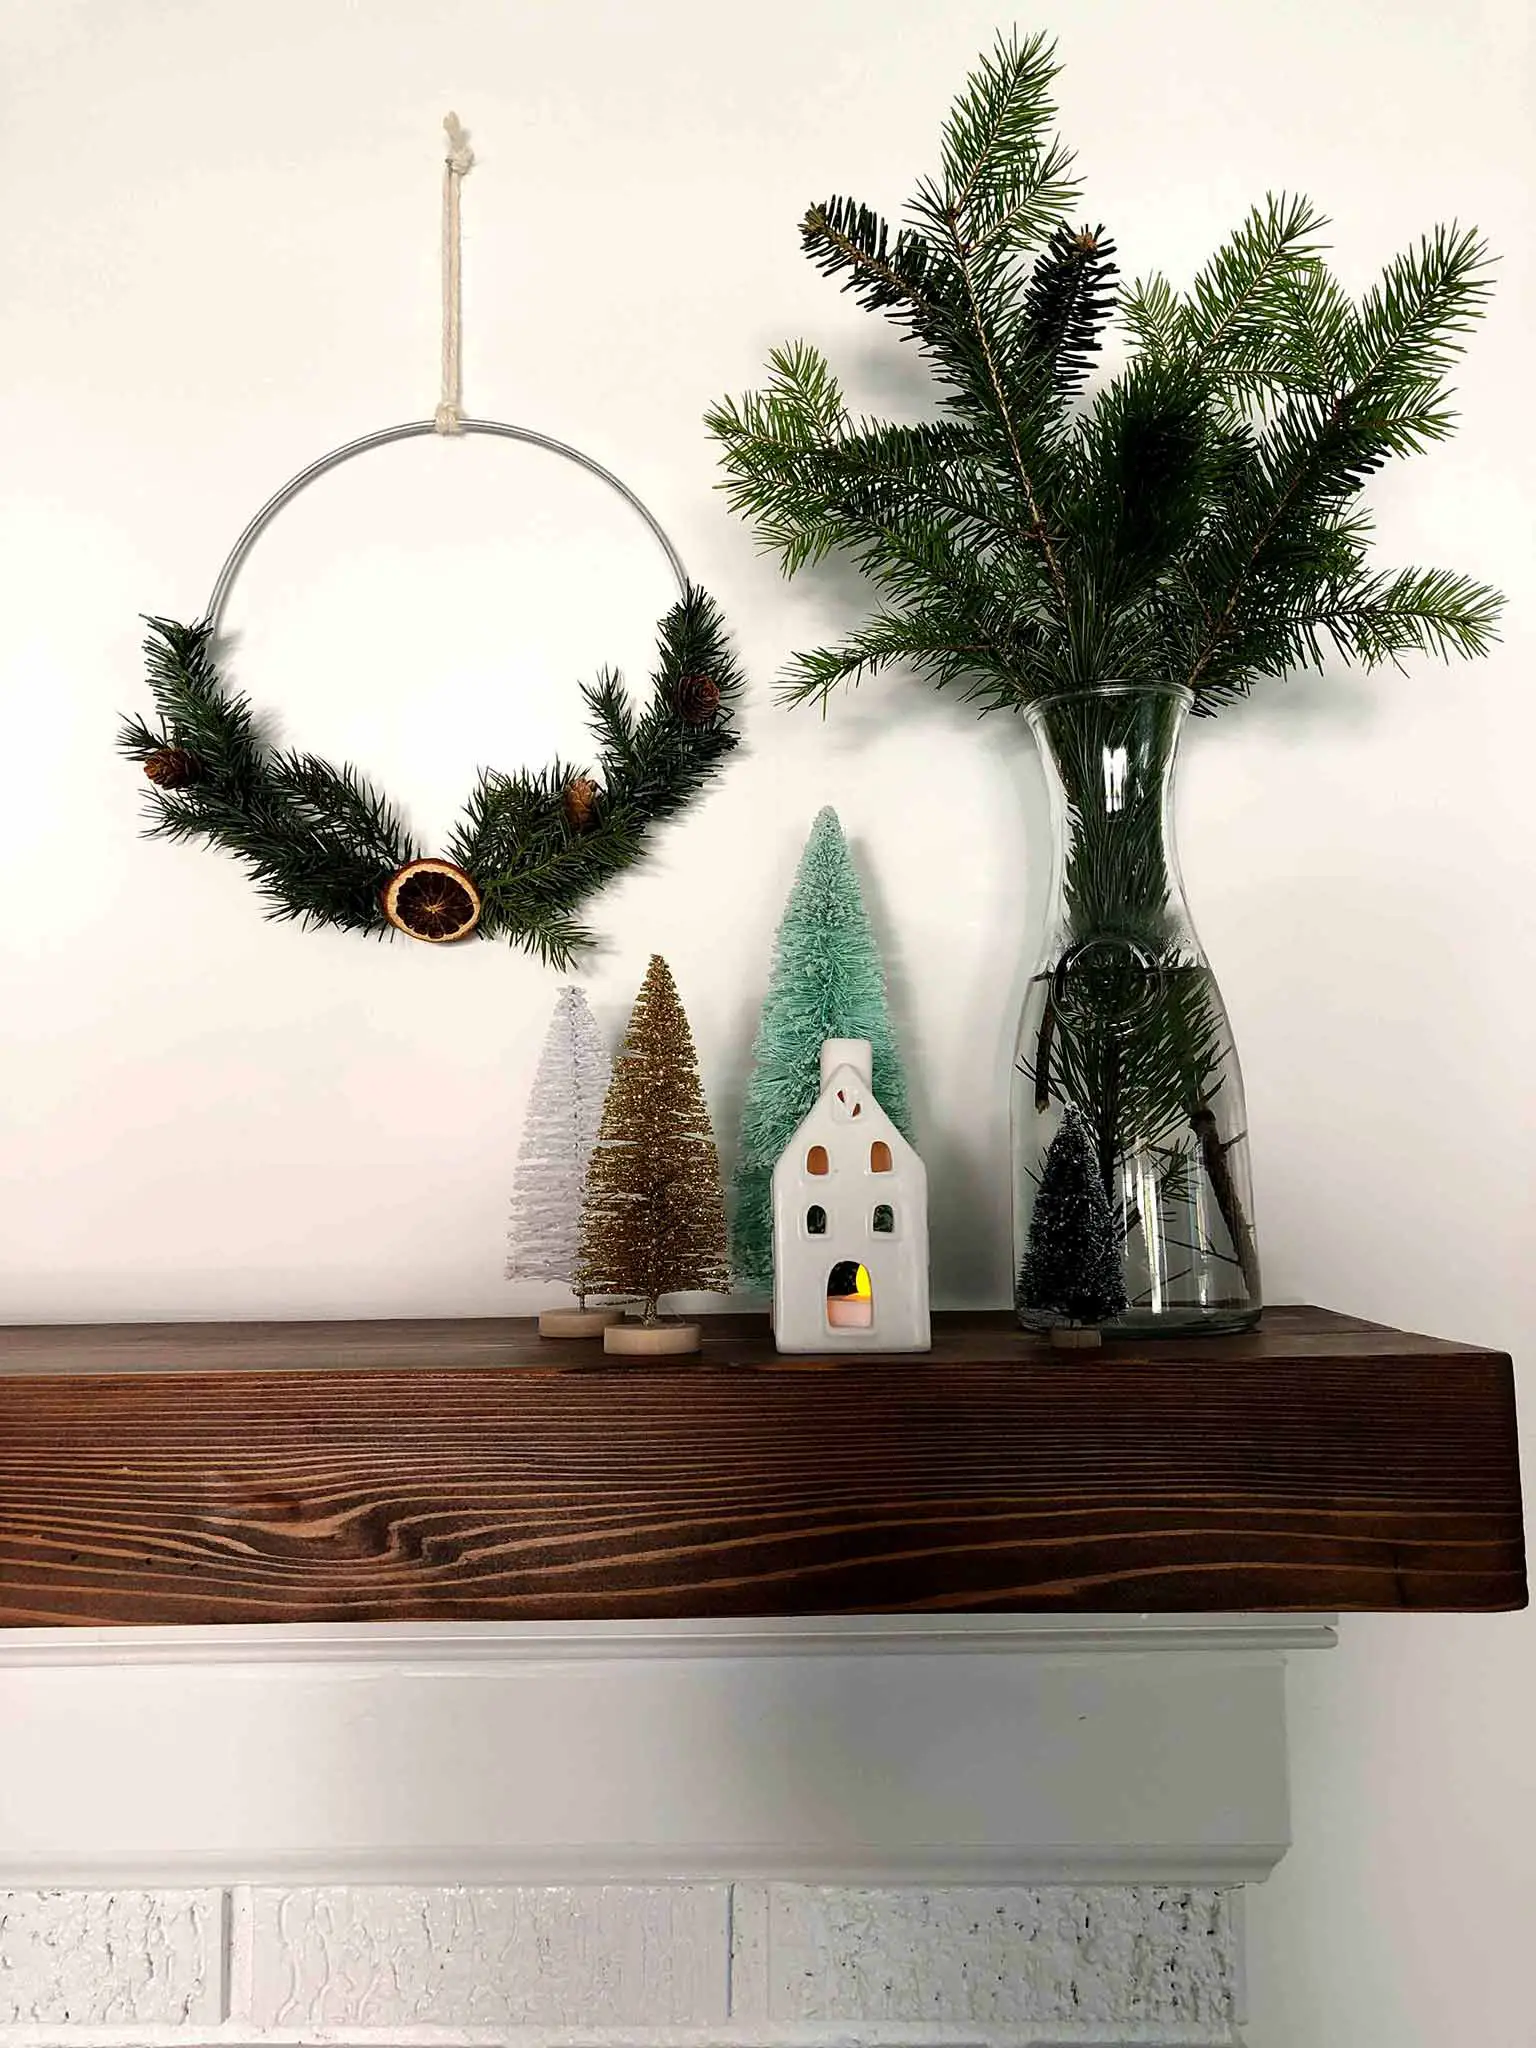 Mantel with hoop wreaths and bottle brush trees - Simple Yet Cozy Christmas Decor - That Homebird Life Blog #christmasdecor #christmasinspiration